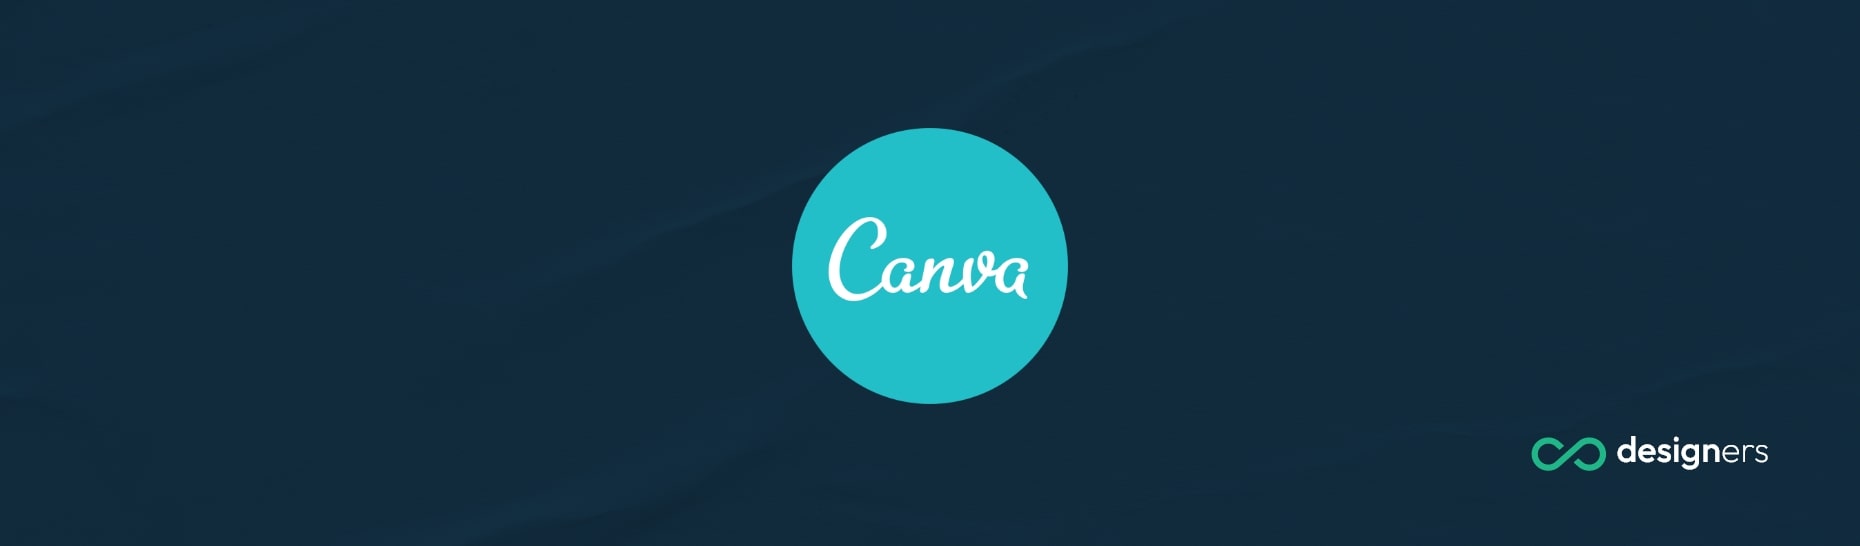 Why Is Canva worth 40 Billion?